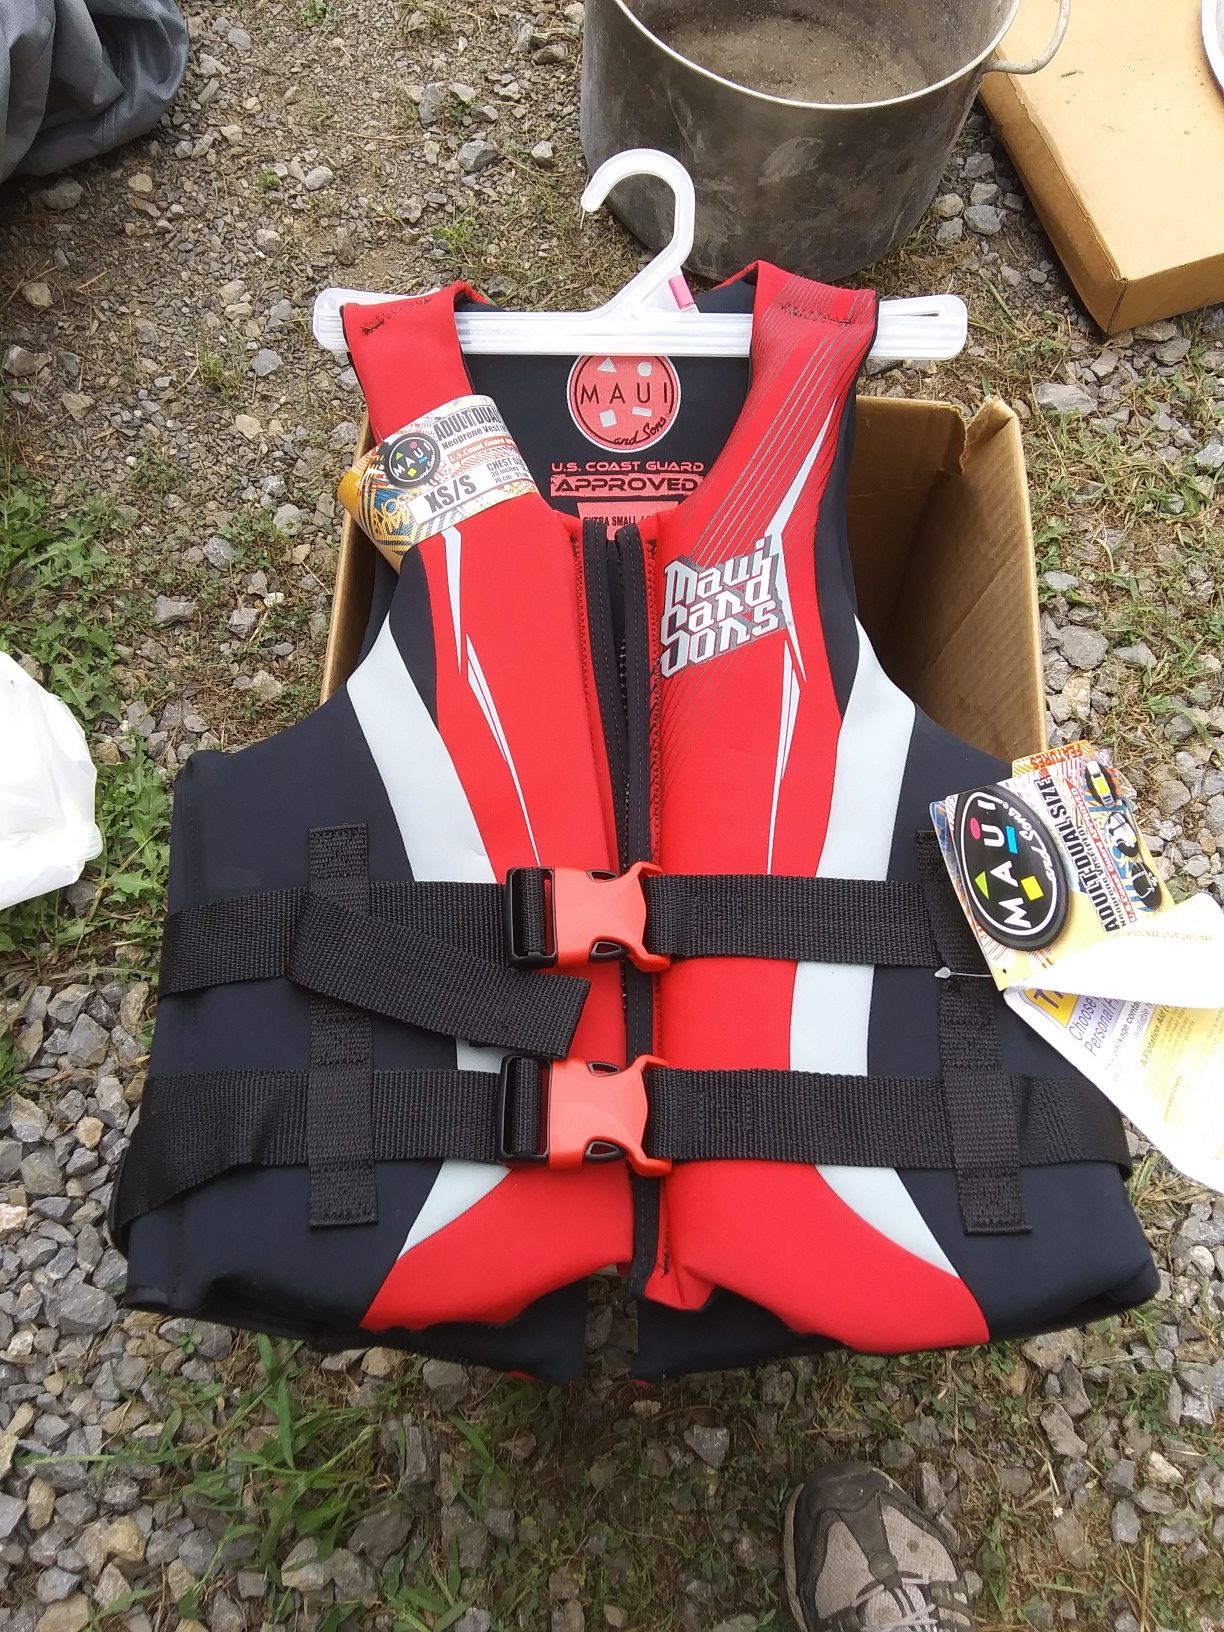 Extra small or small life jacket